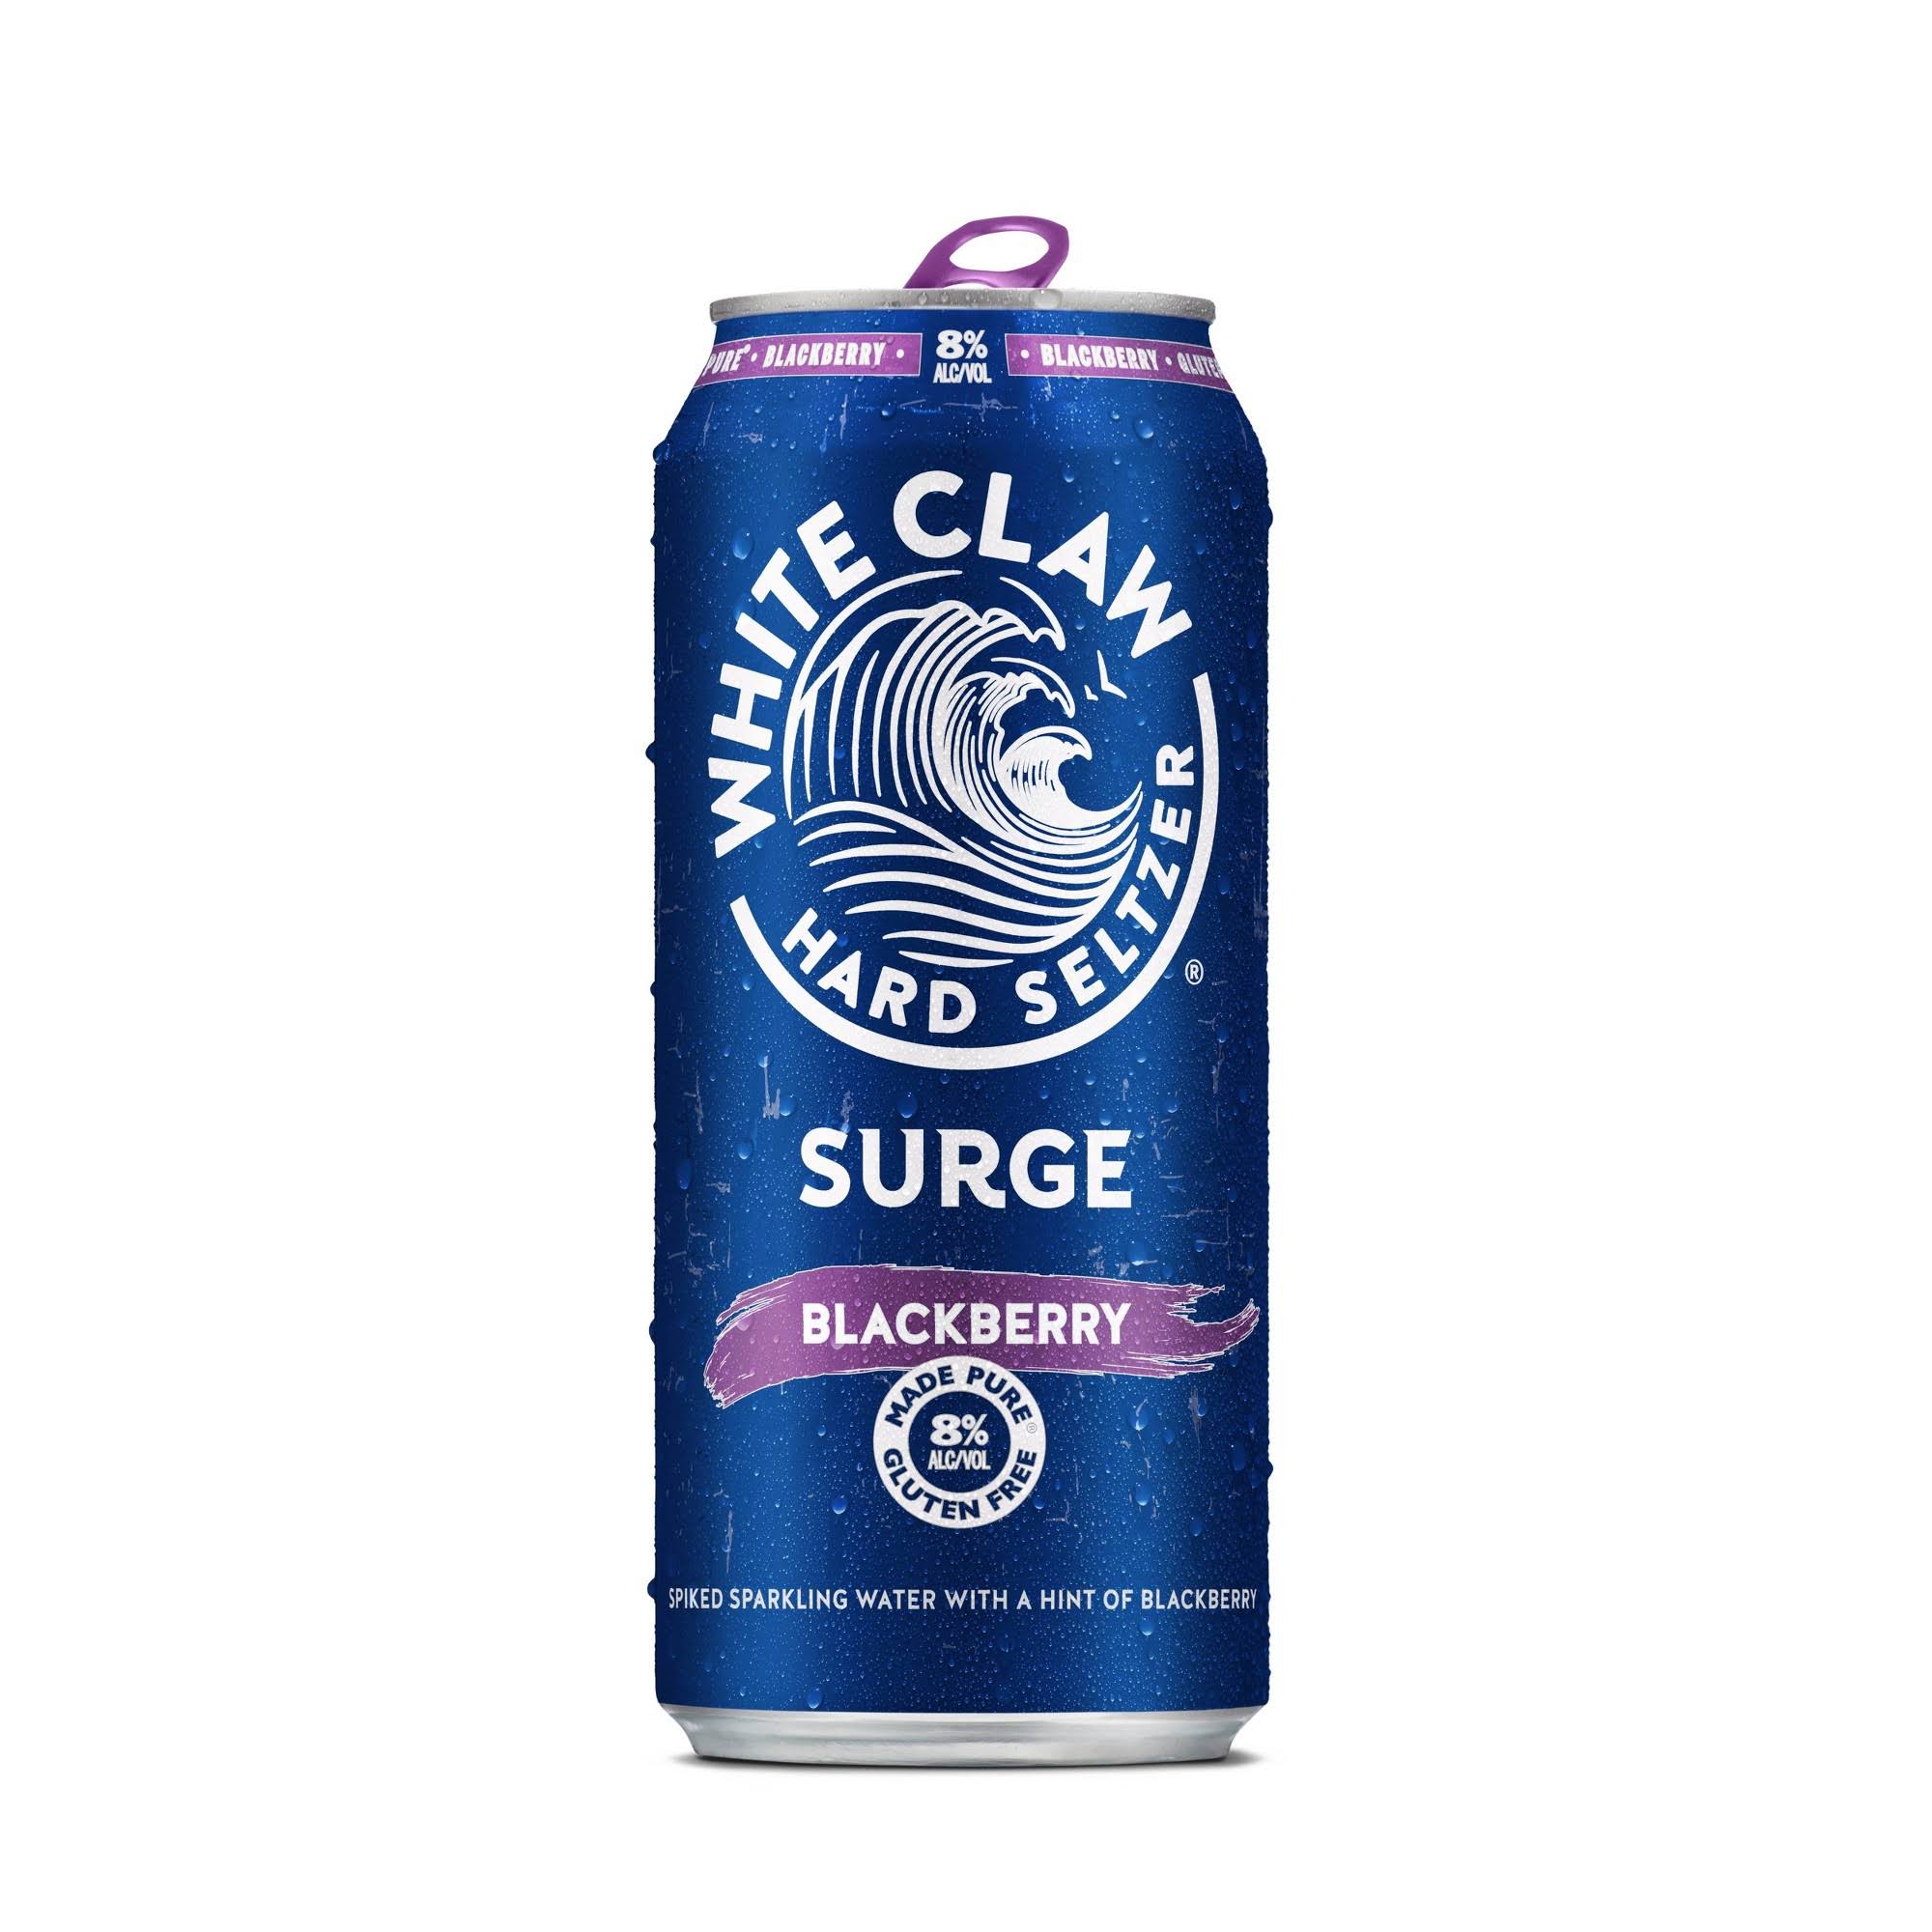 White Claw Beer, Hard Seltzer, Blackberry, Surge - 1 pt